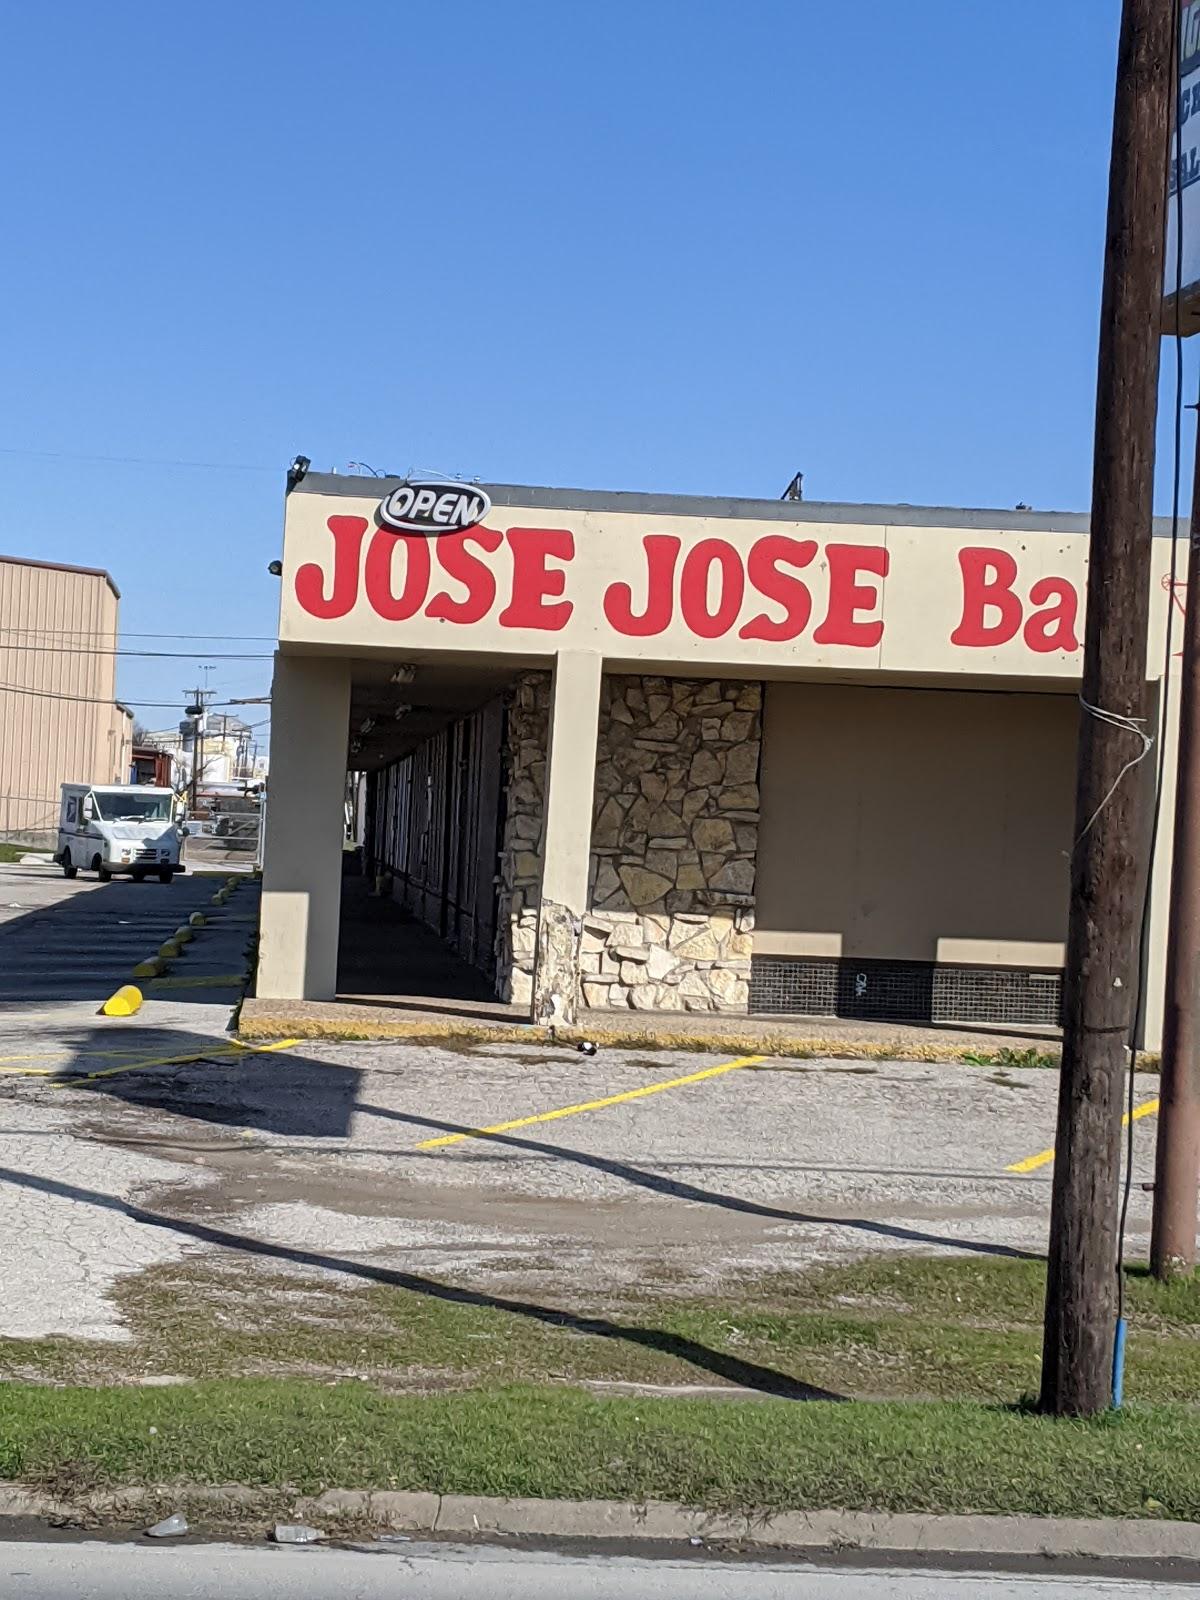 Jose Jose bar in Fort Worth